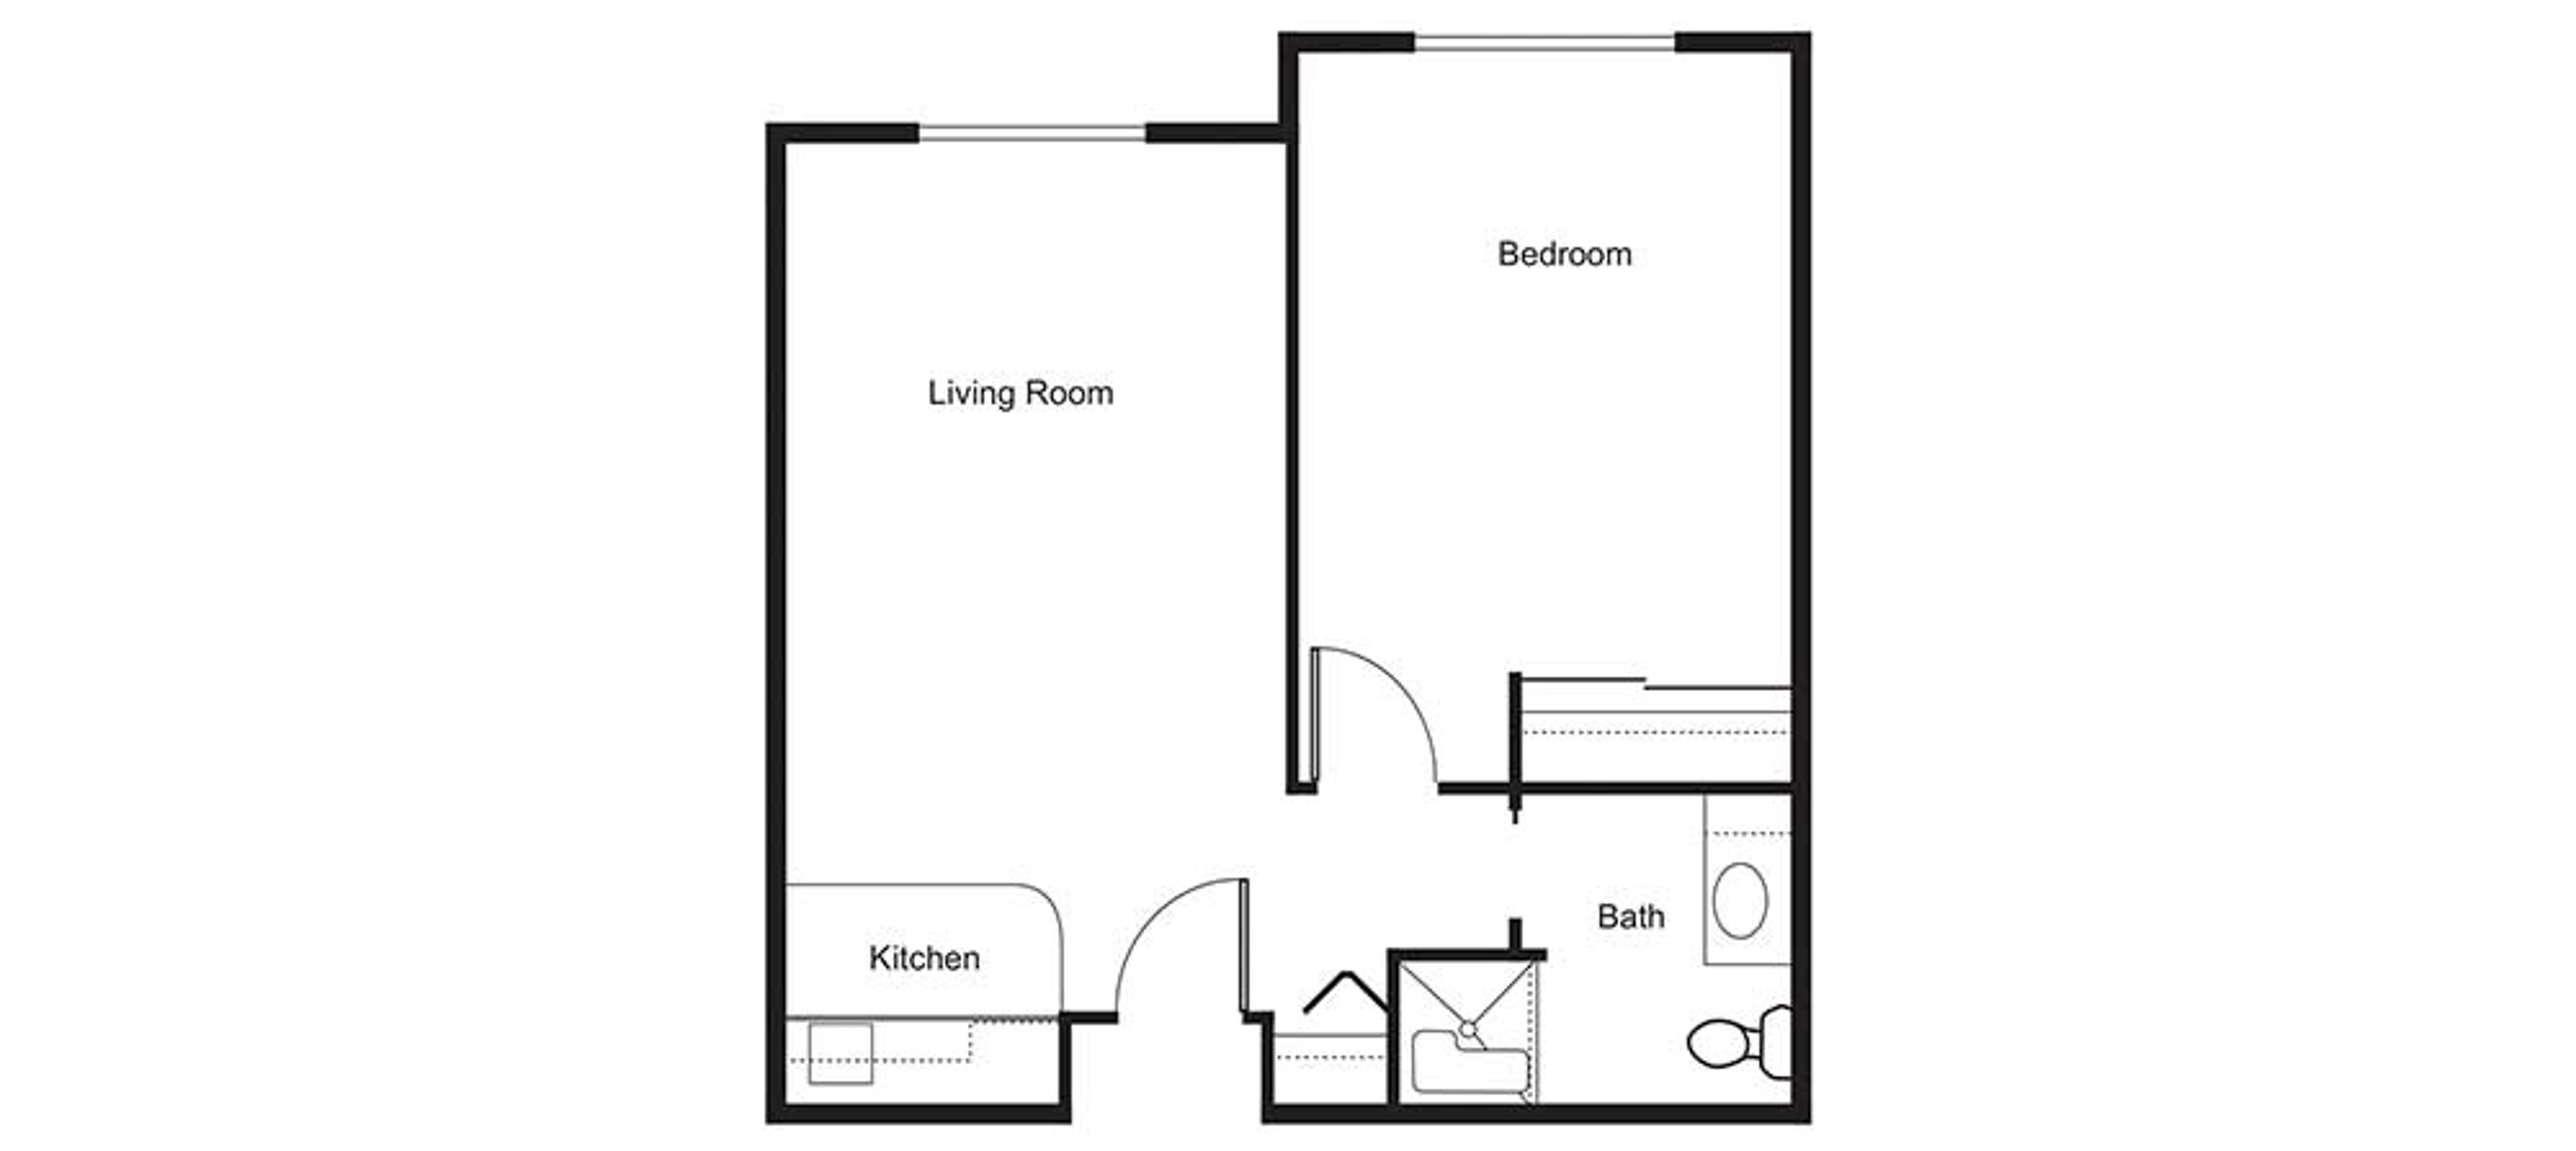 Floorplan - Edmonds Landing - 1B 1B Premium Assisted Living 